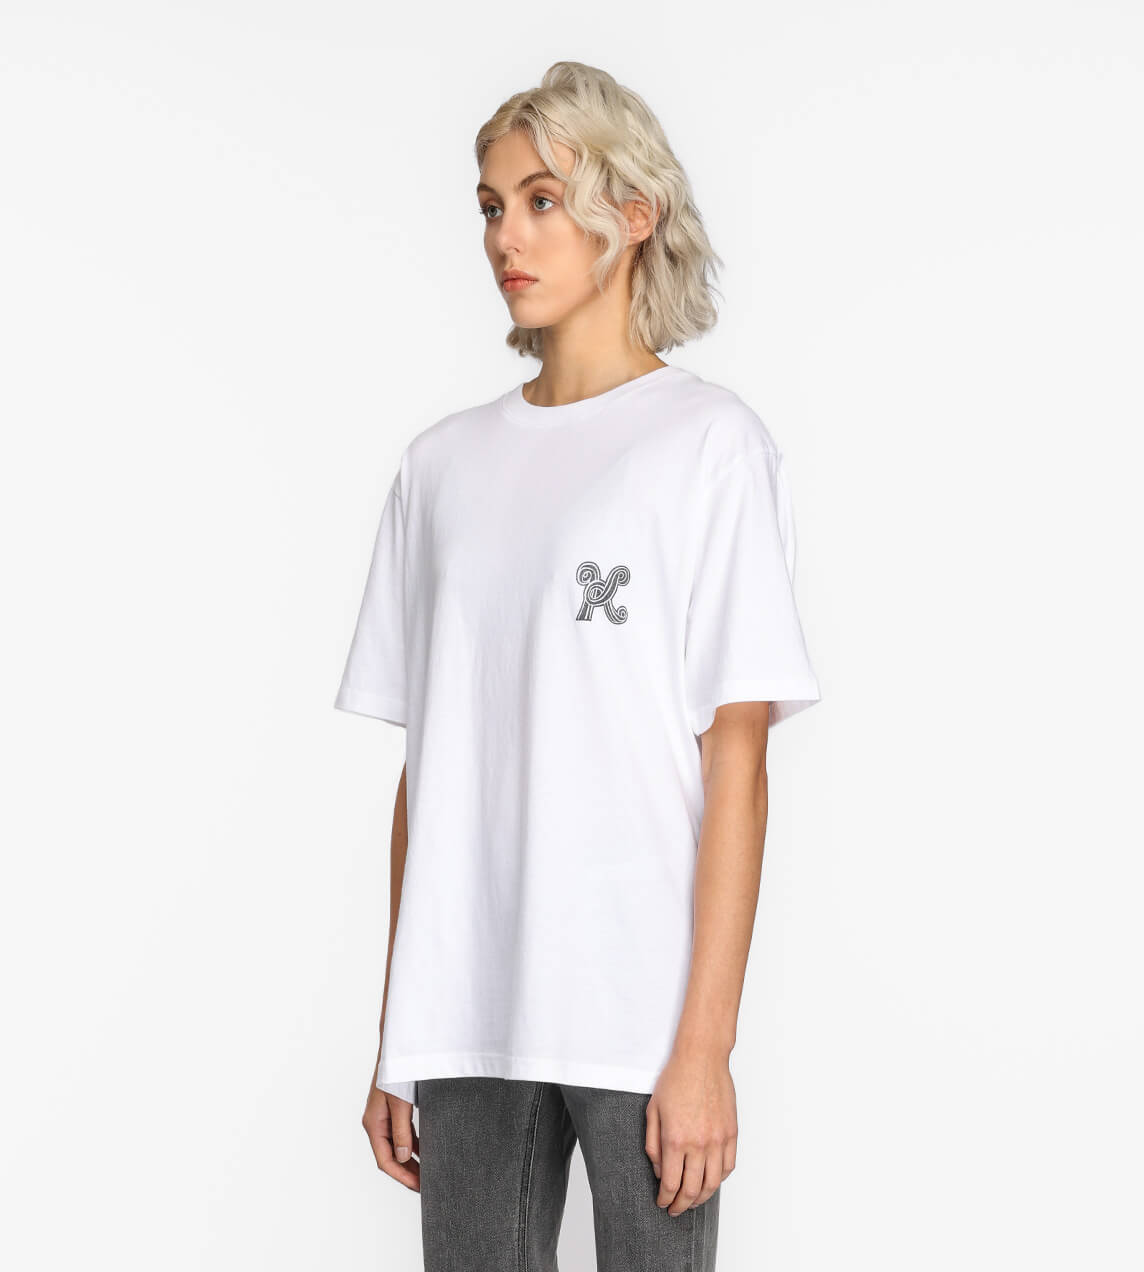 KIMHEKIM - 'Hair' Stamped Loose Fit T-shirt White